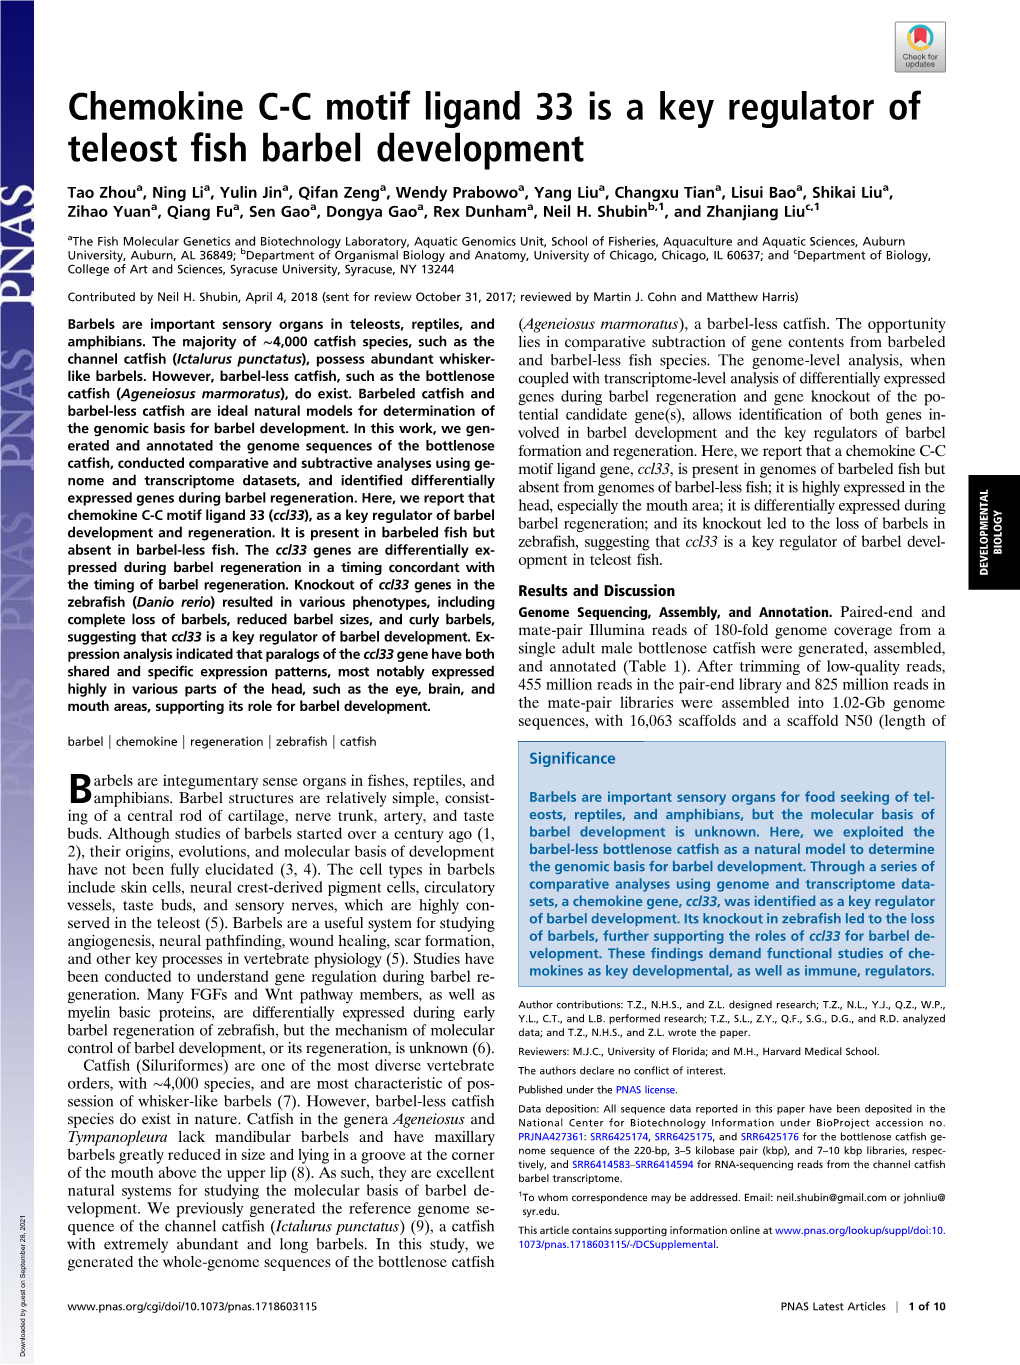 Chemokine C-C Motif Ligand 33 Is a Key Regulator of Teleost Fish Barbel Development